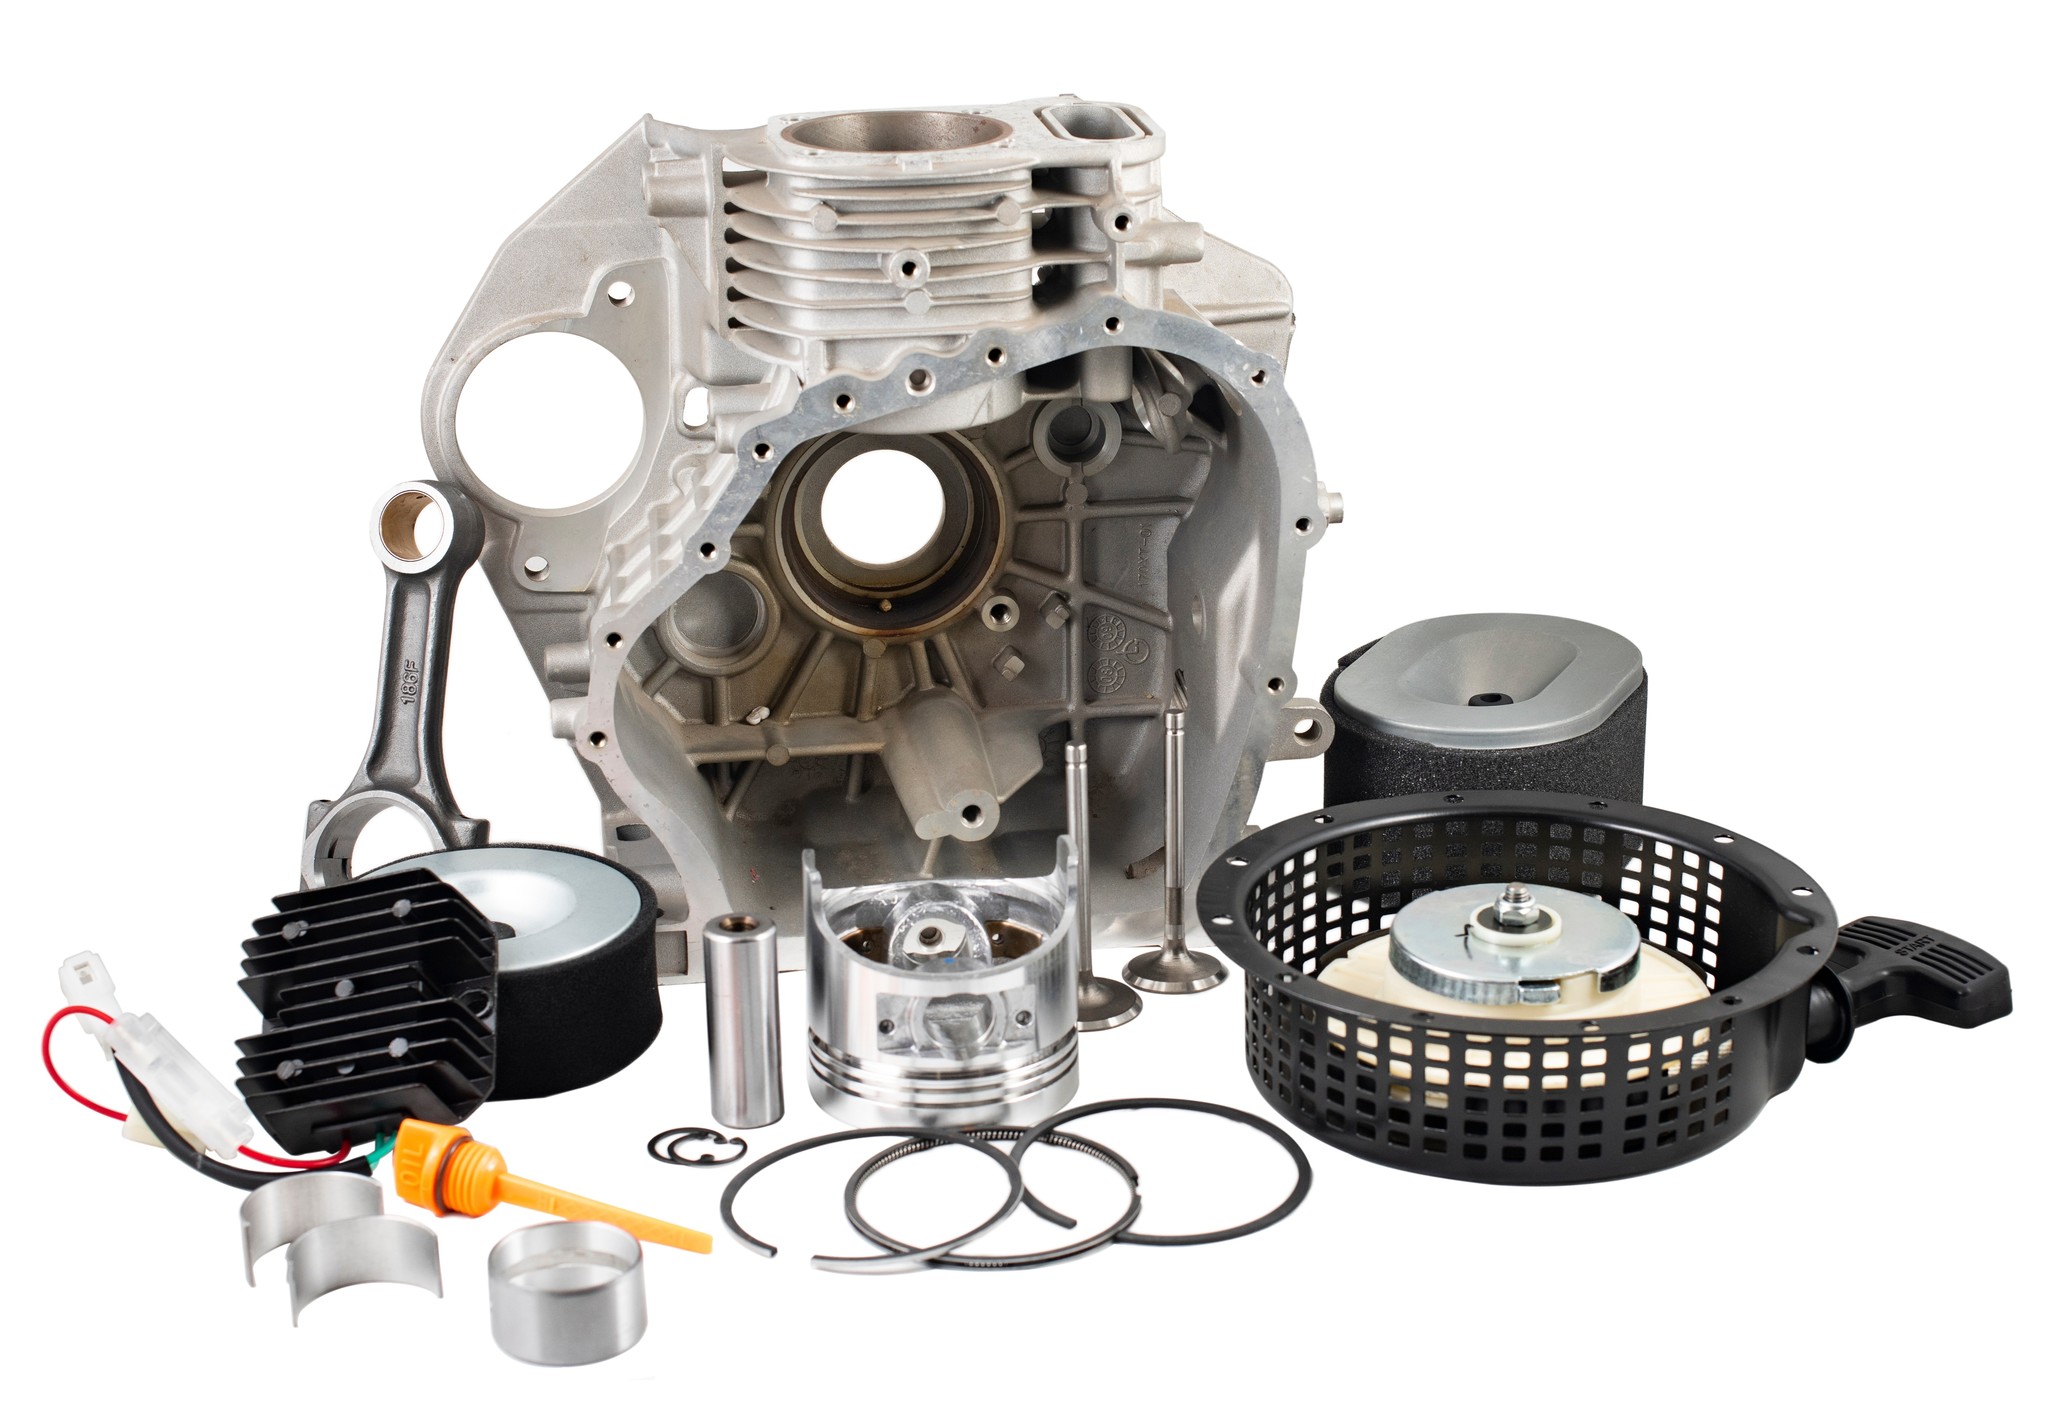 Ölfilter für Perkins Motor 1004.40 + 4.108 + A4.236 u.a ( 2654403 ) - ATX  Motorparts Shop